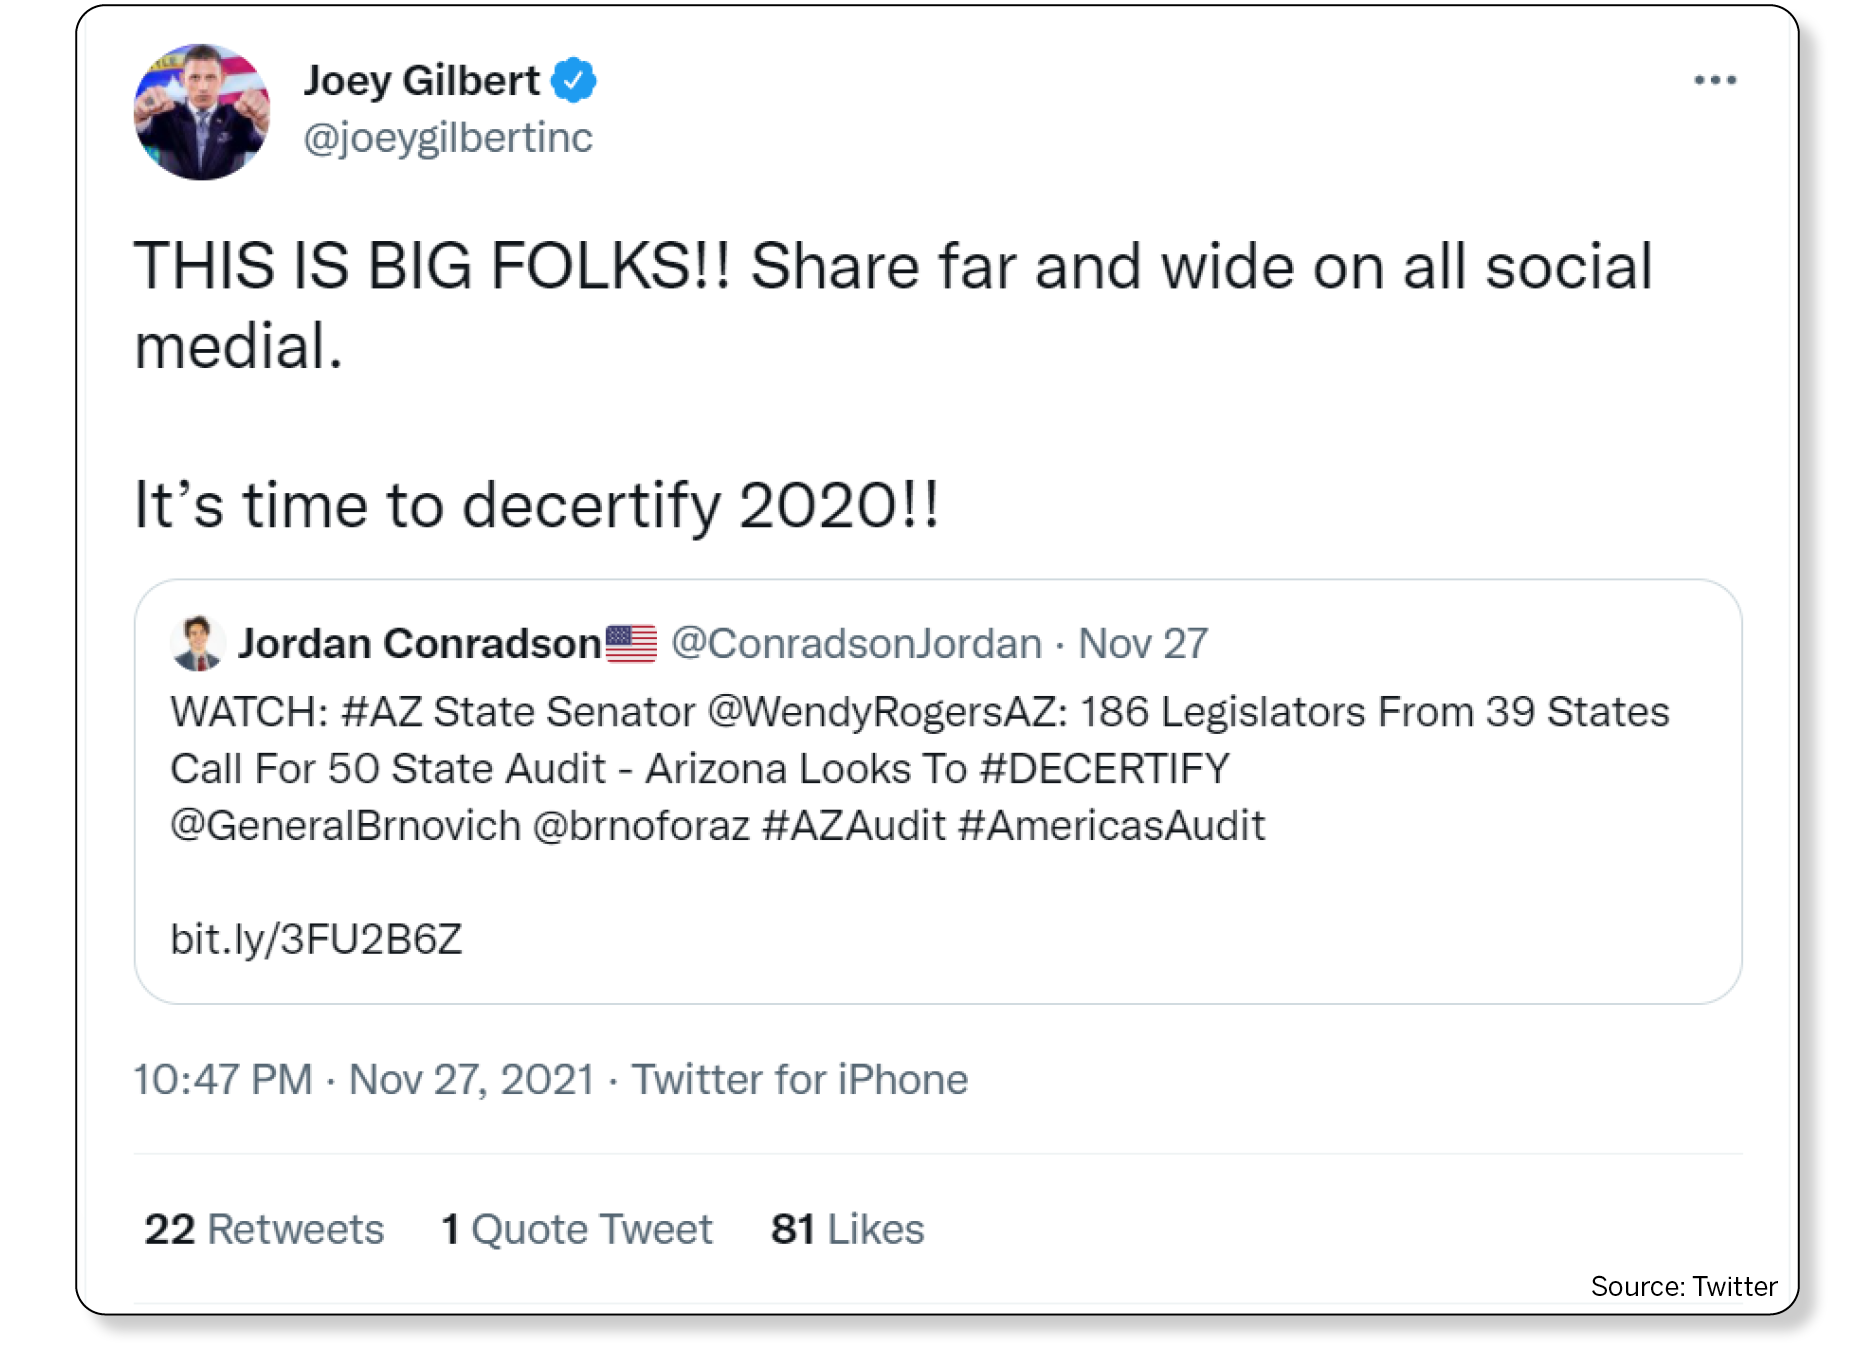 Joey Gilbert tweet